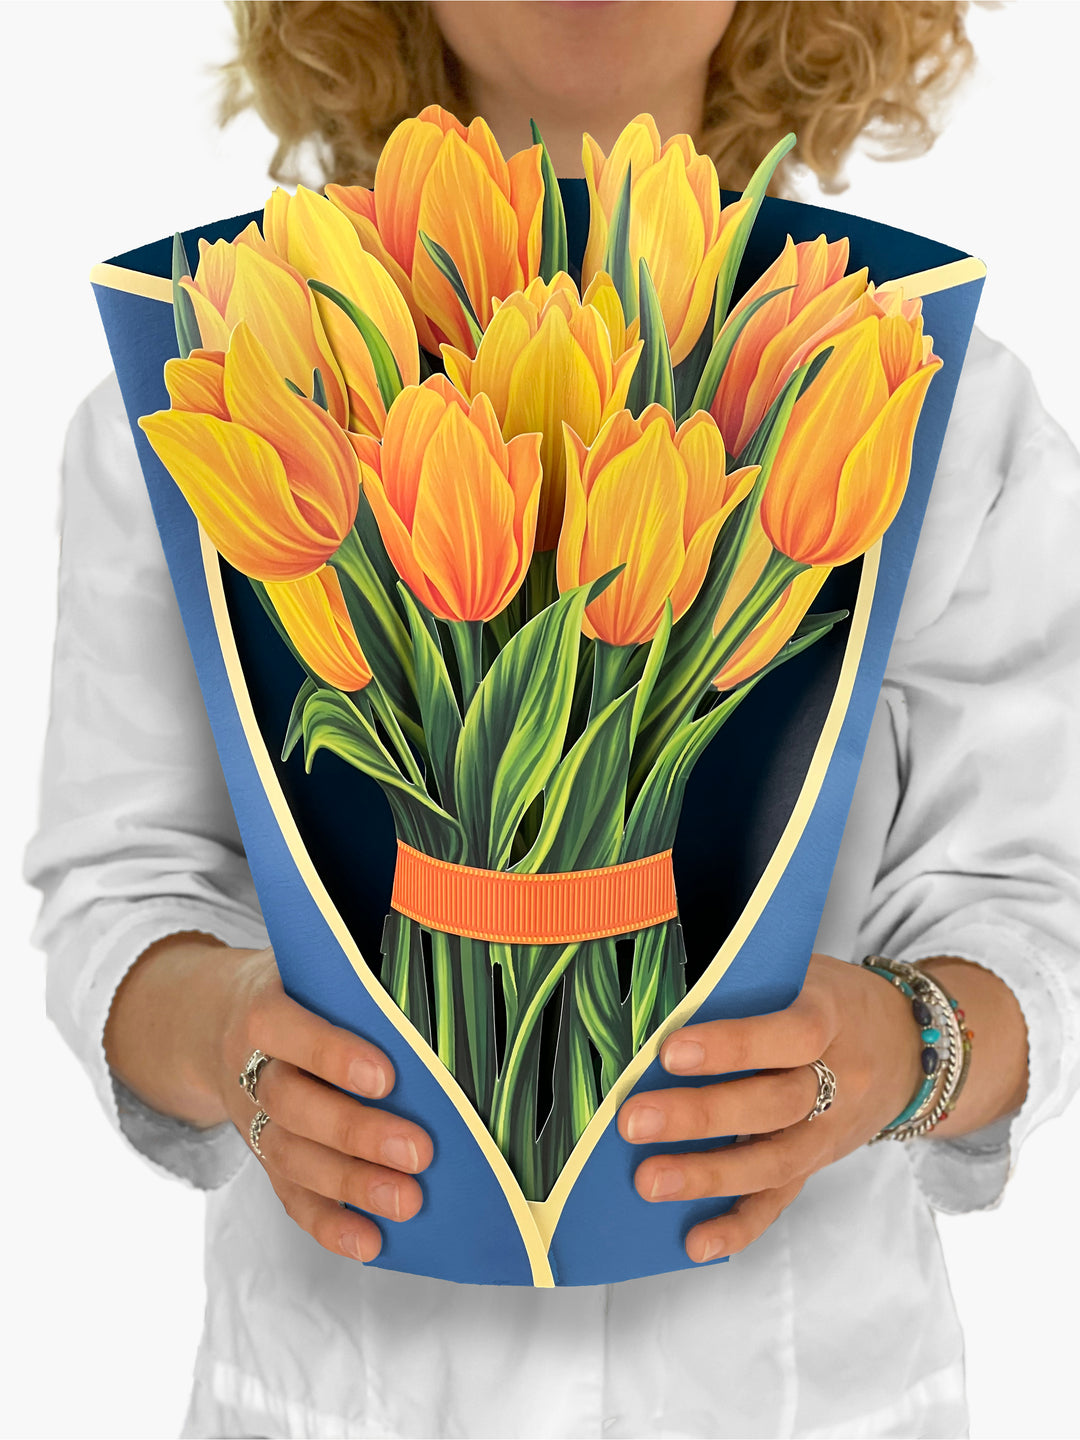 FreshCut Paper  3D Pop Up Flower Bouquet Greeting Cards